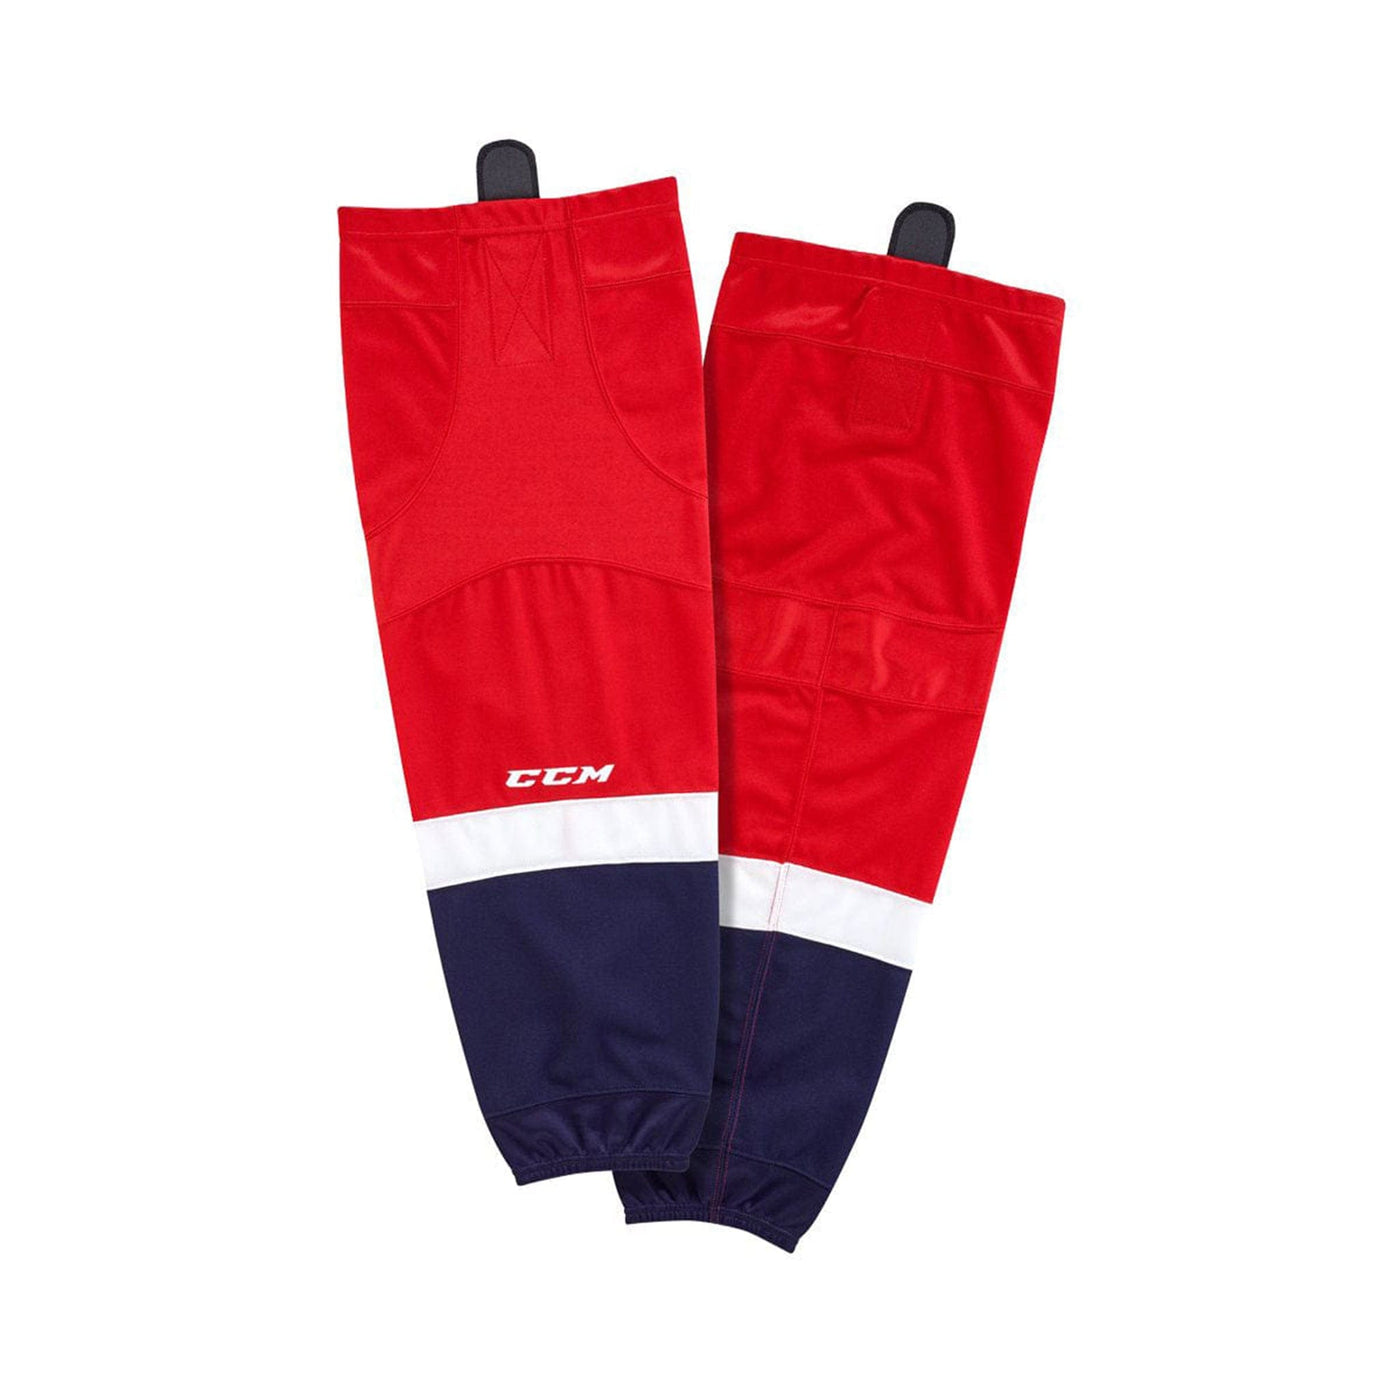 Washington Capitals Home CCM Quicklite 8000 Hockey Socks - The Hockey Shop Source For Sports